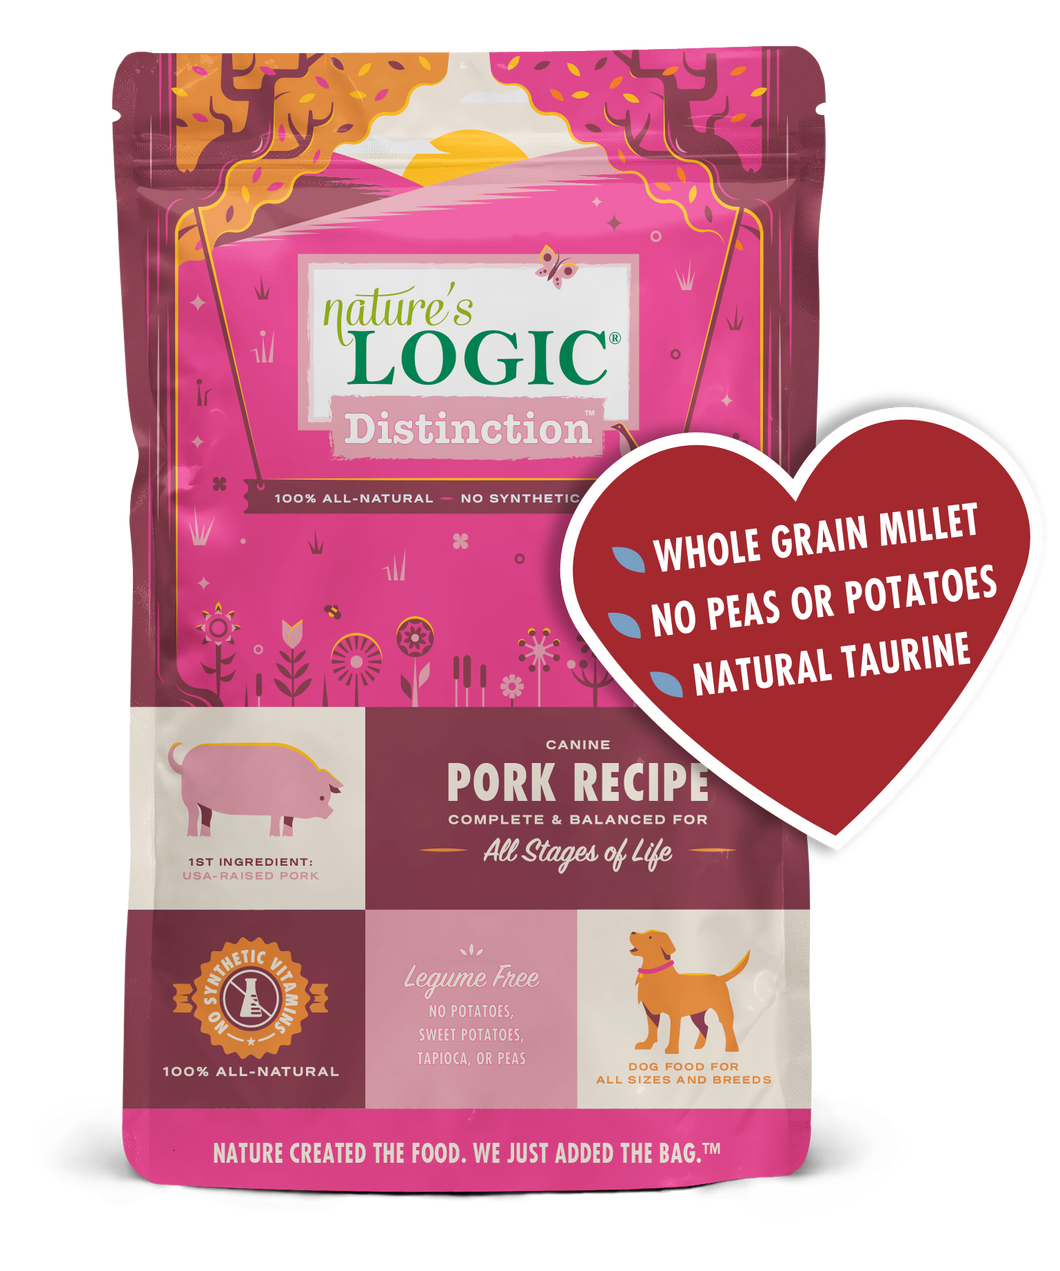 Nature's Logic Distinction - Pork